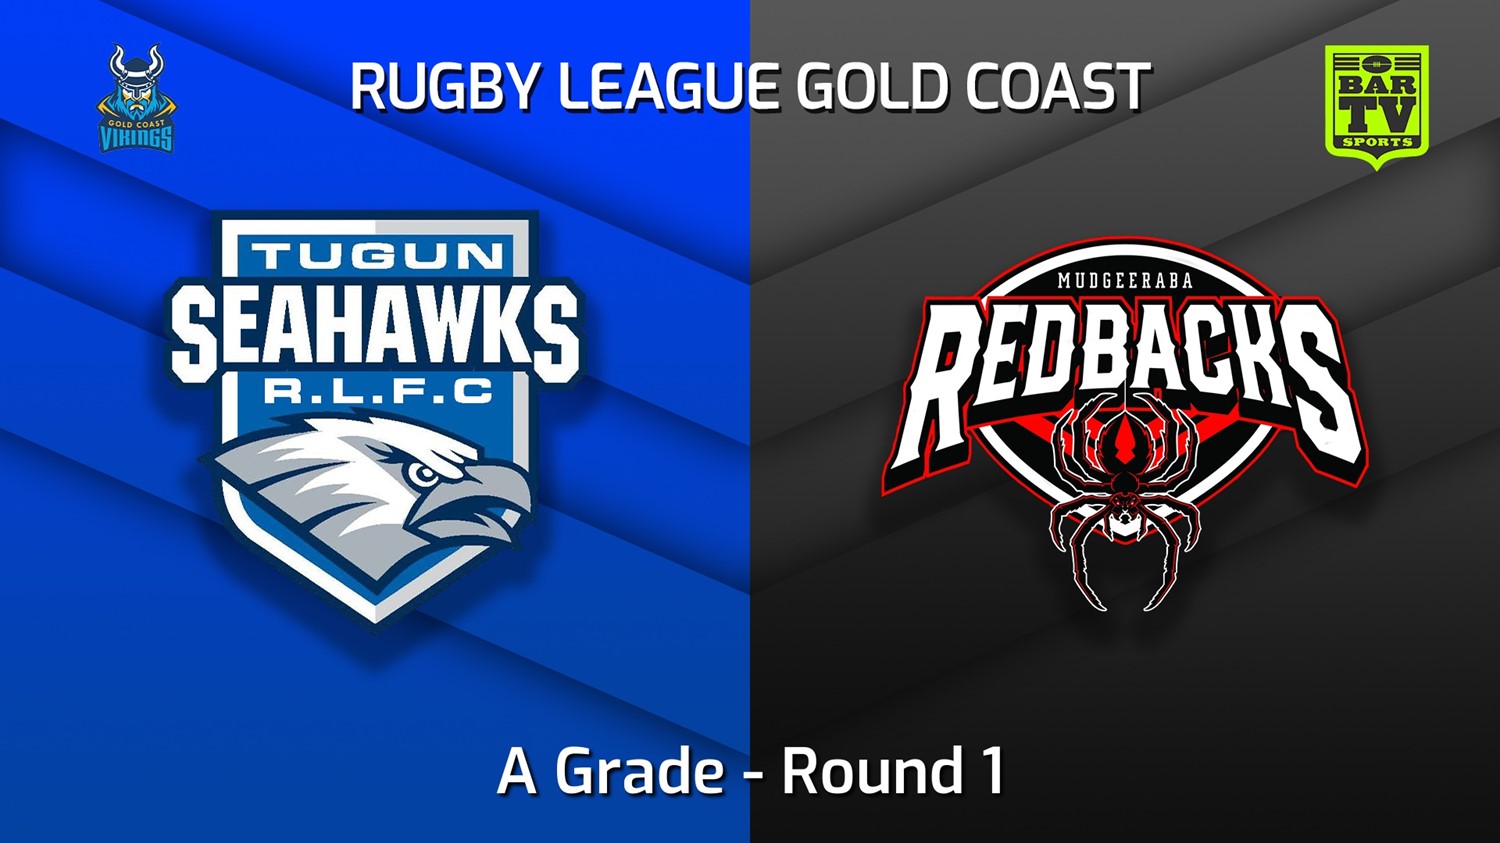 220327-Gold Coast Round 1 - A Grade - Tugun Seahawks v Mudgeeraba Redbacks Slate Image